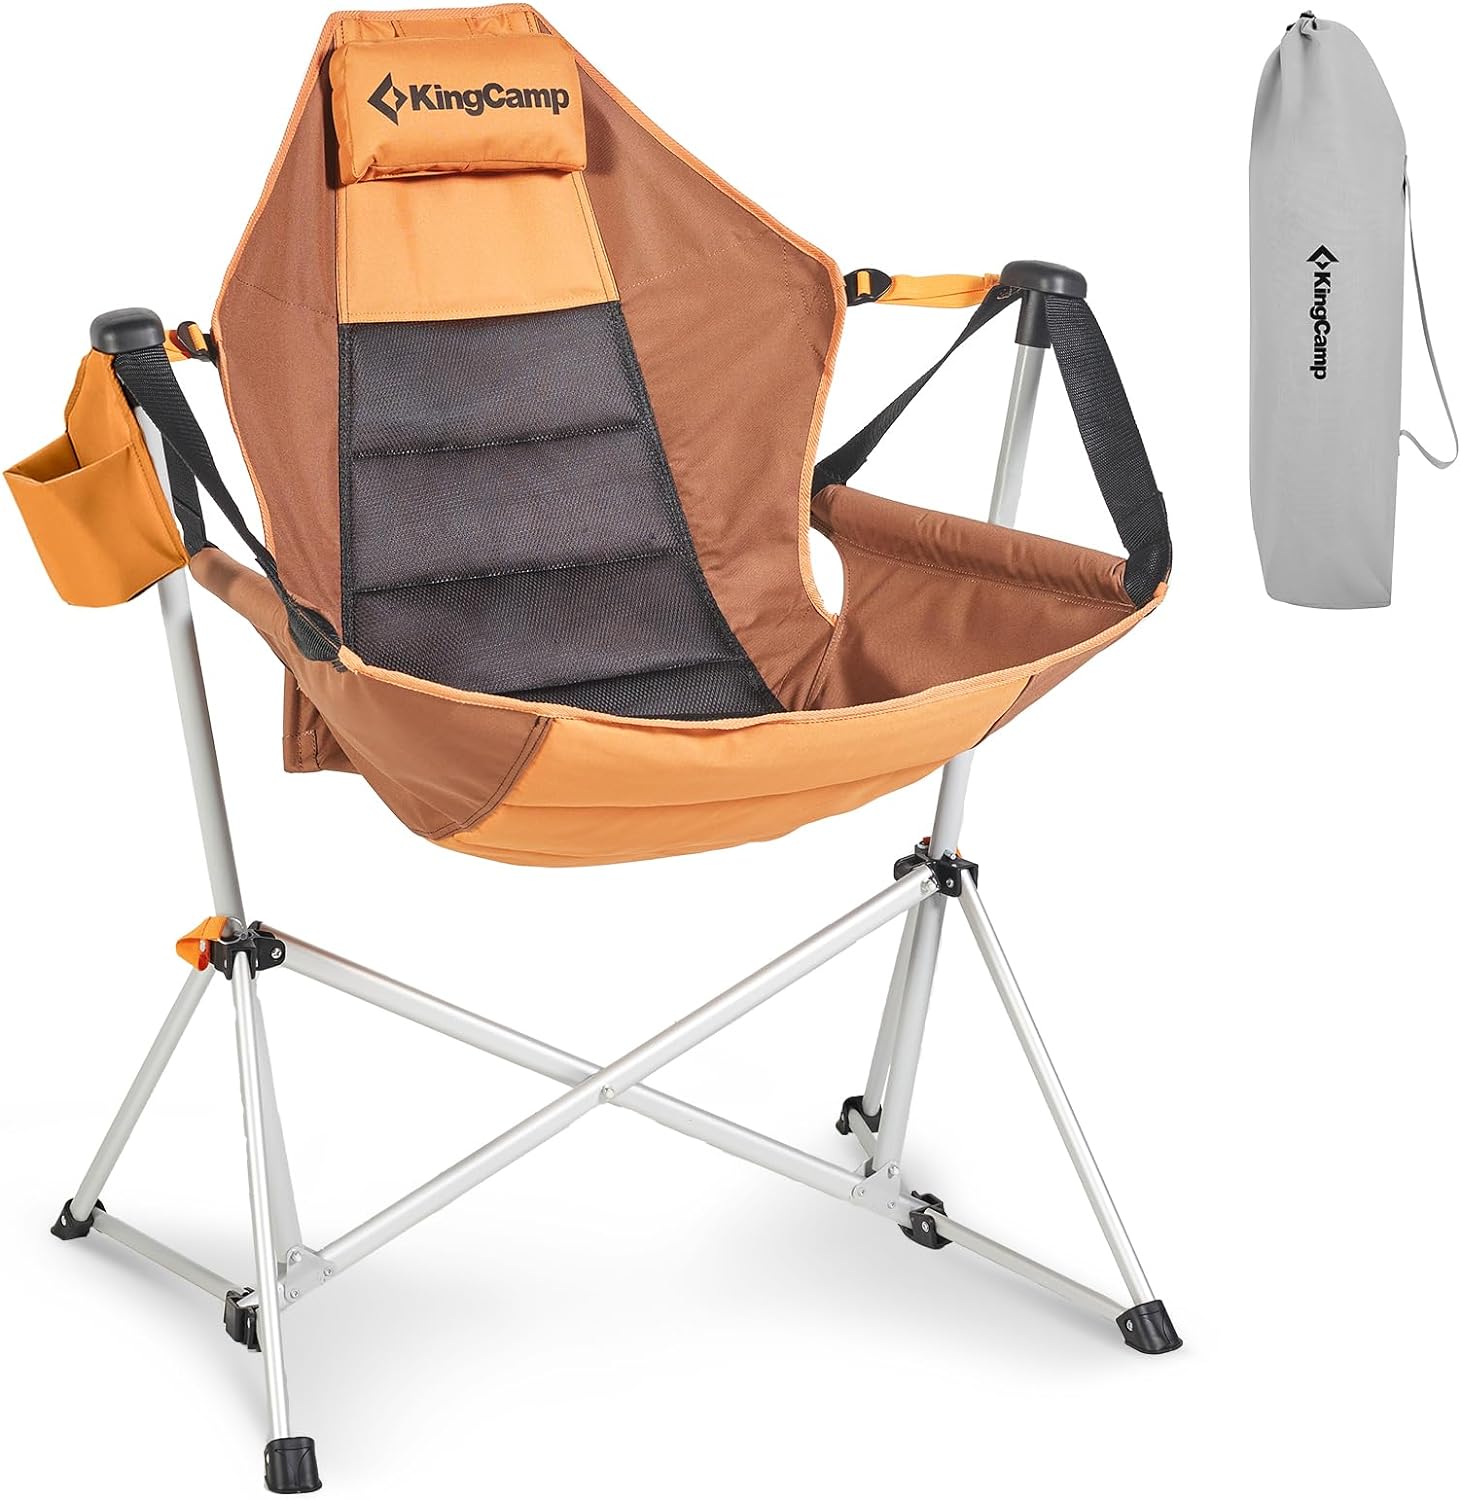 KingCamp Hammock Rocking Camp Chair